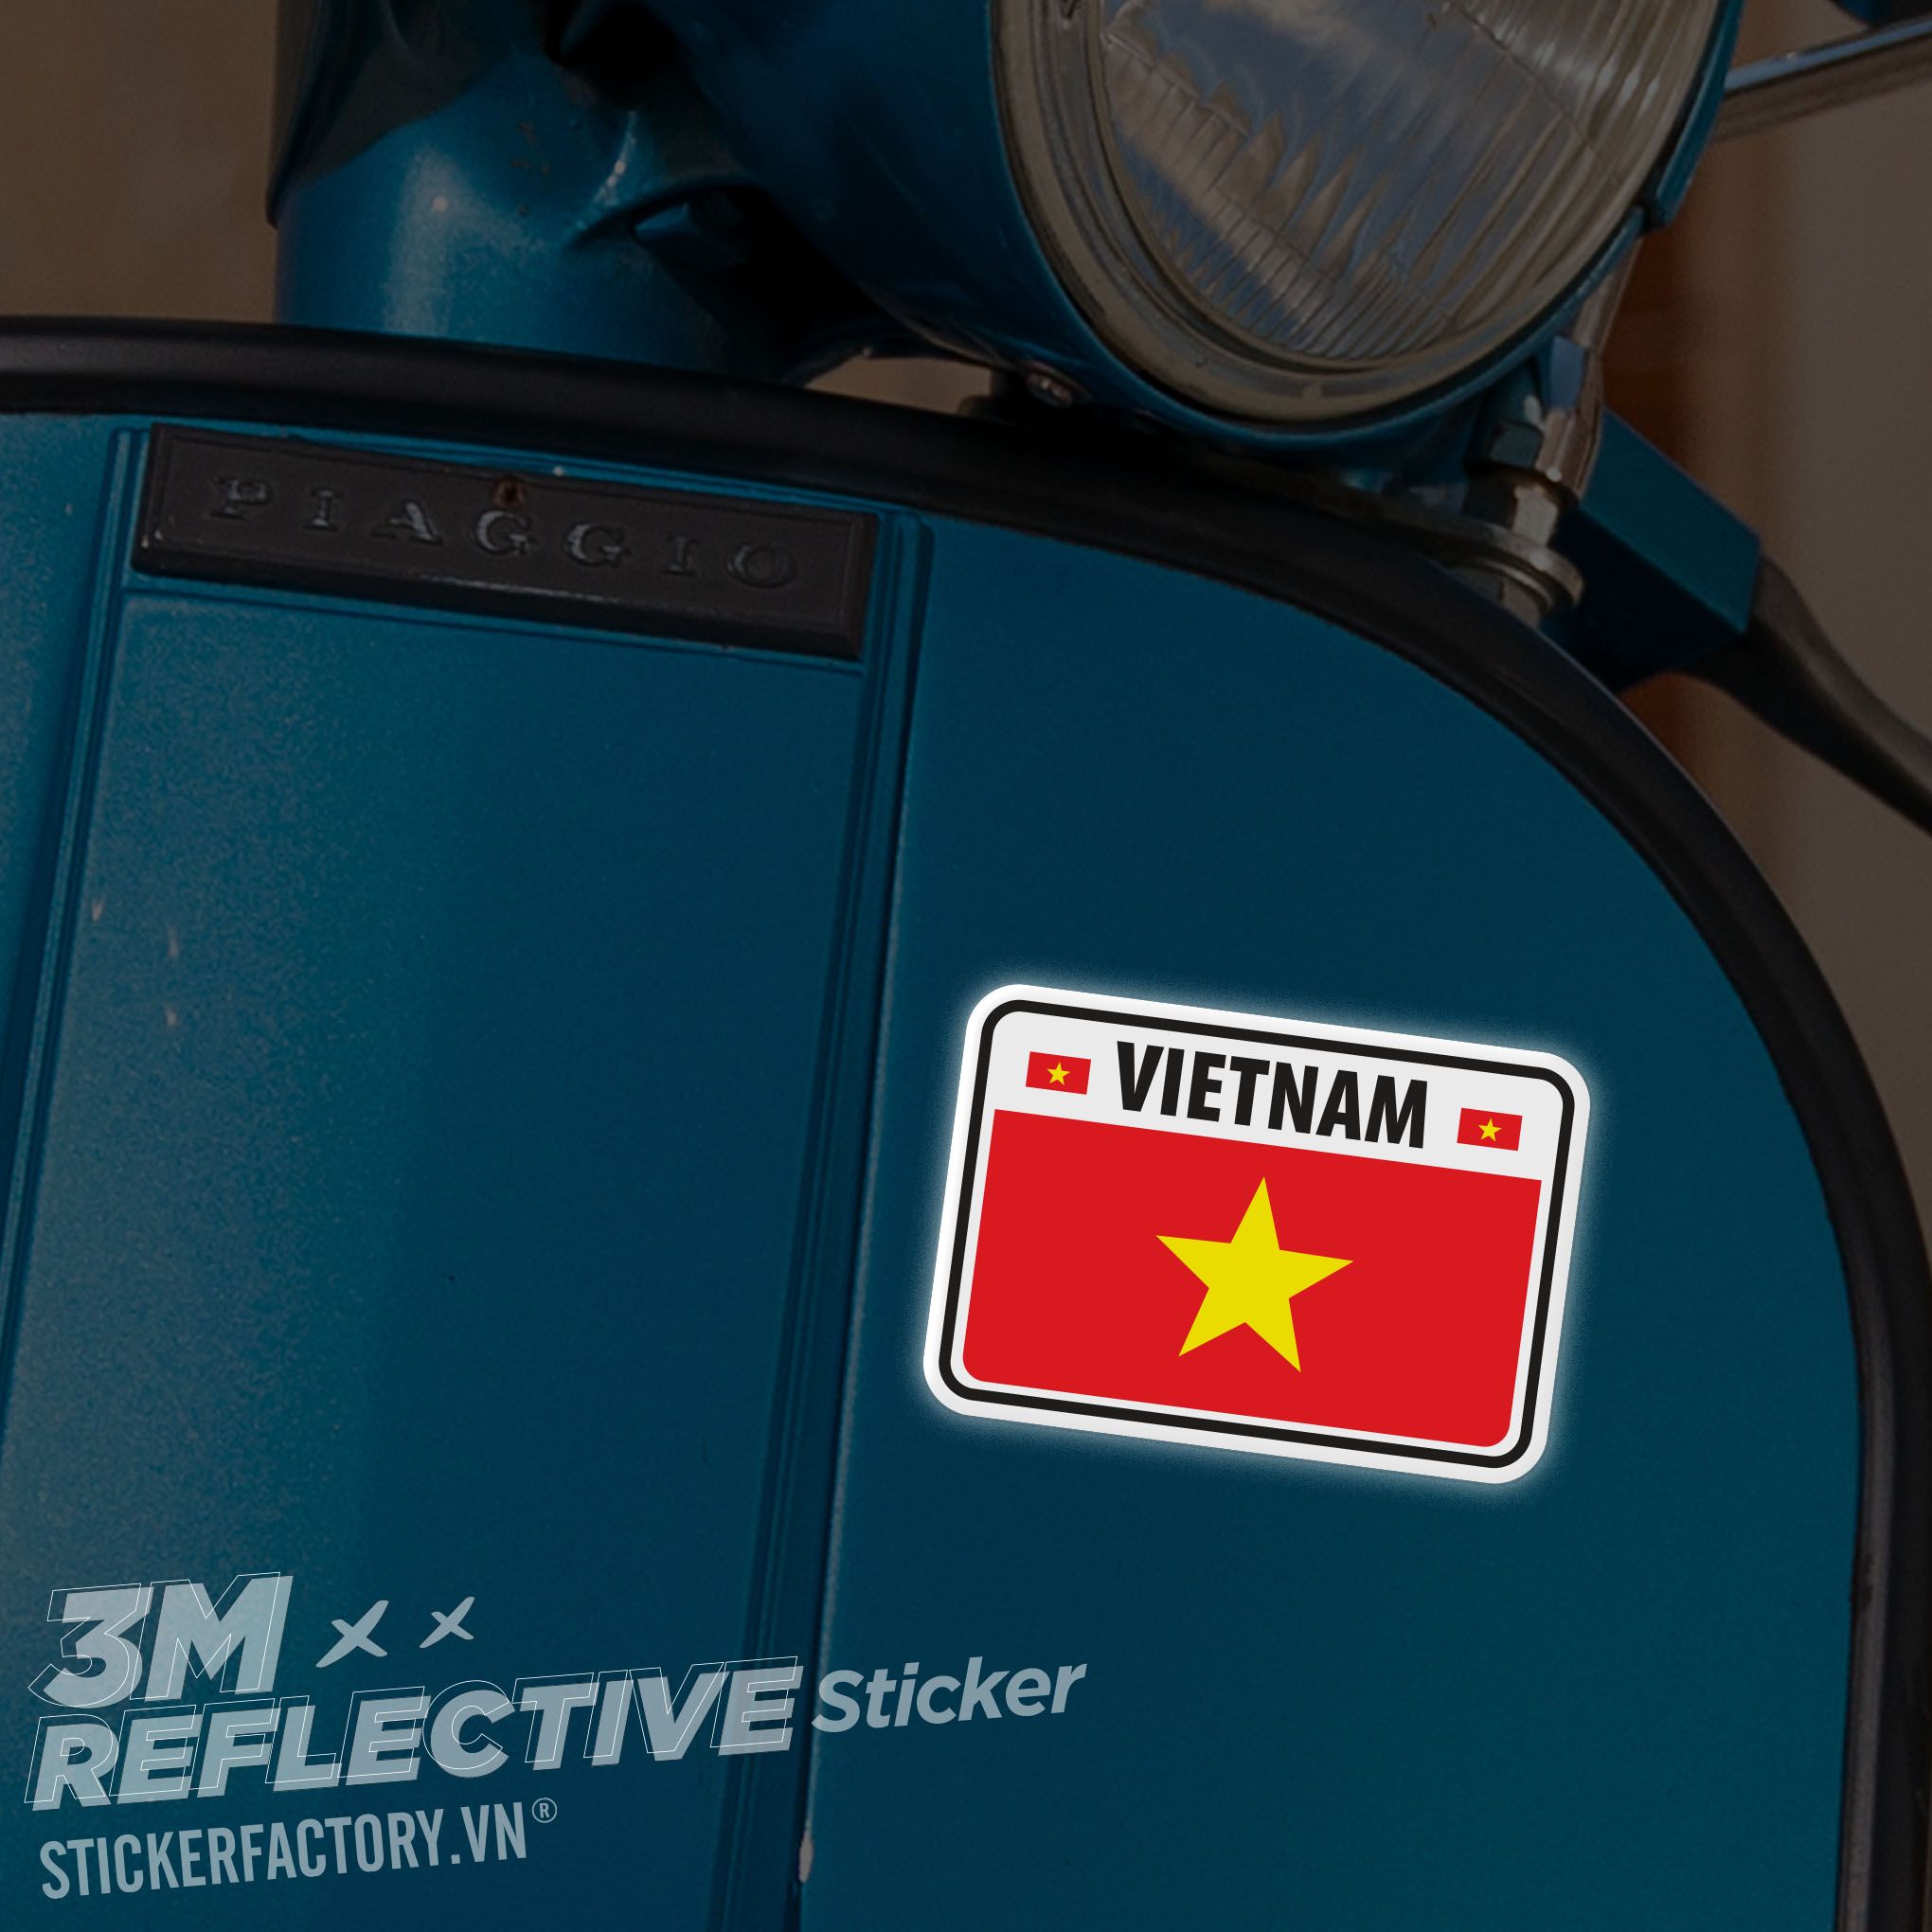 VIETNAM FLAG RECTANGLE 3M - Reflective Sticker Die-cut